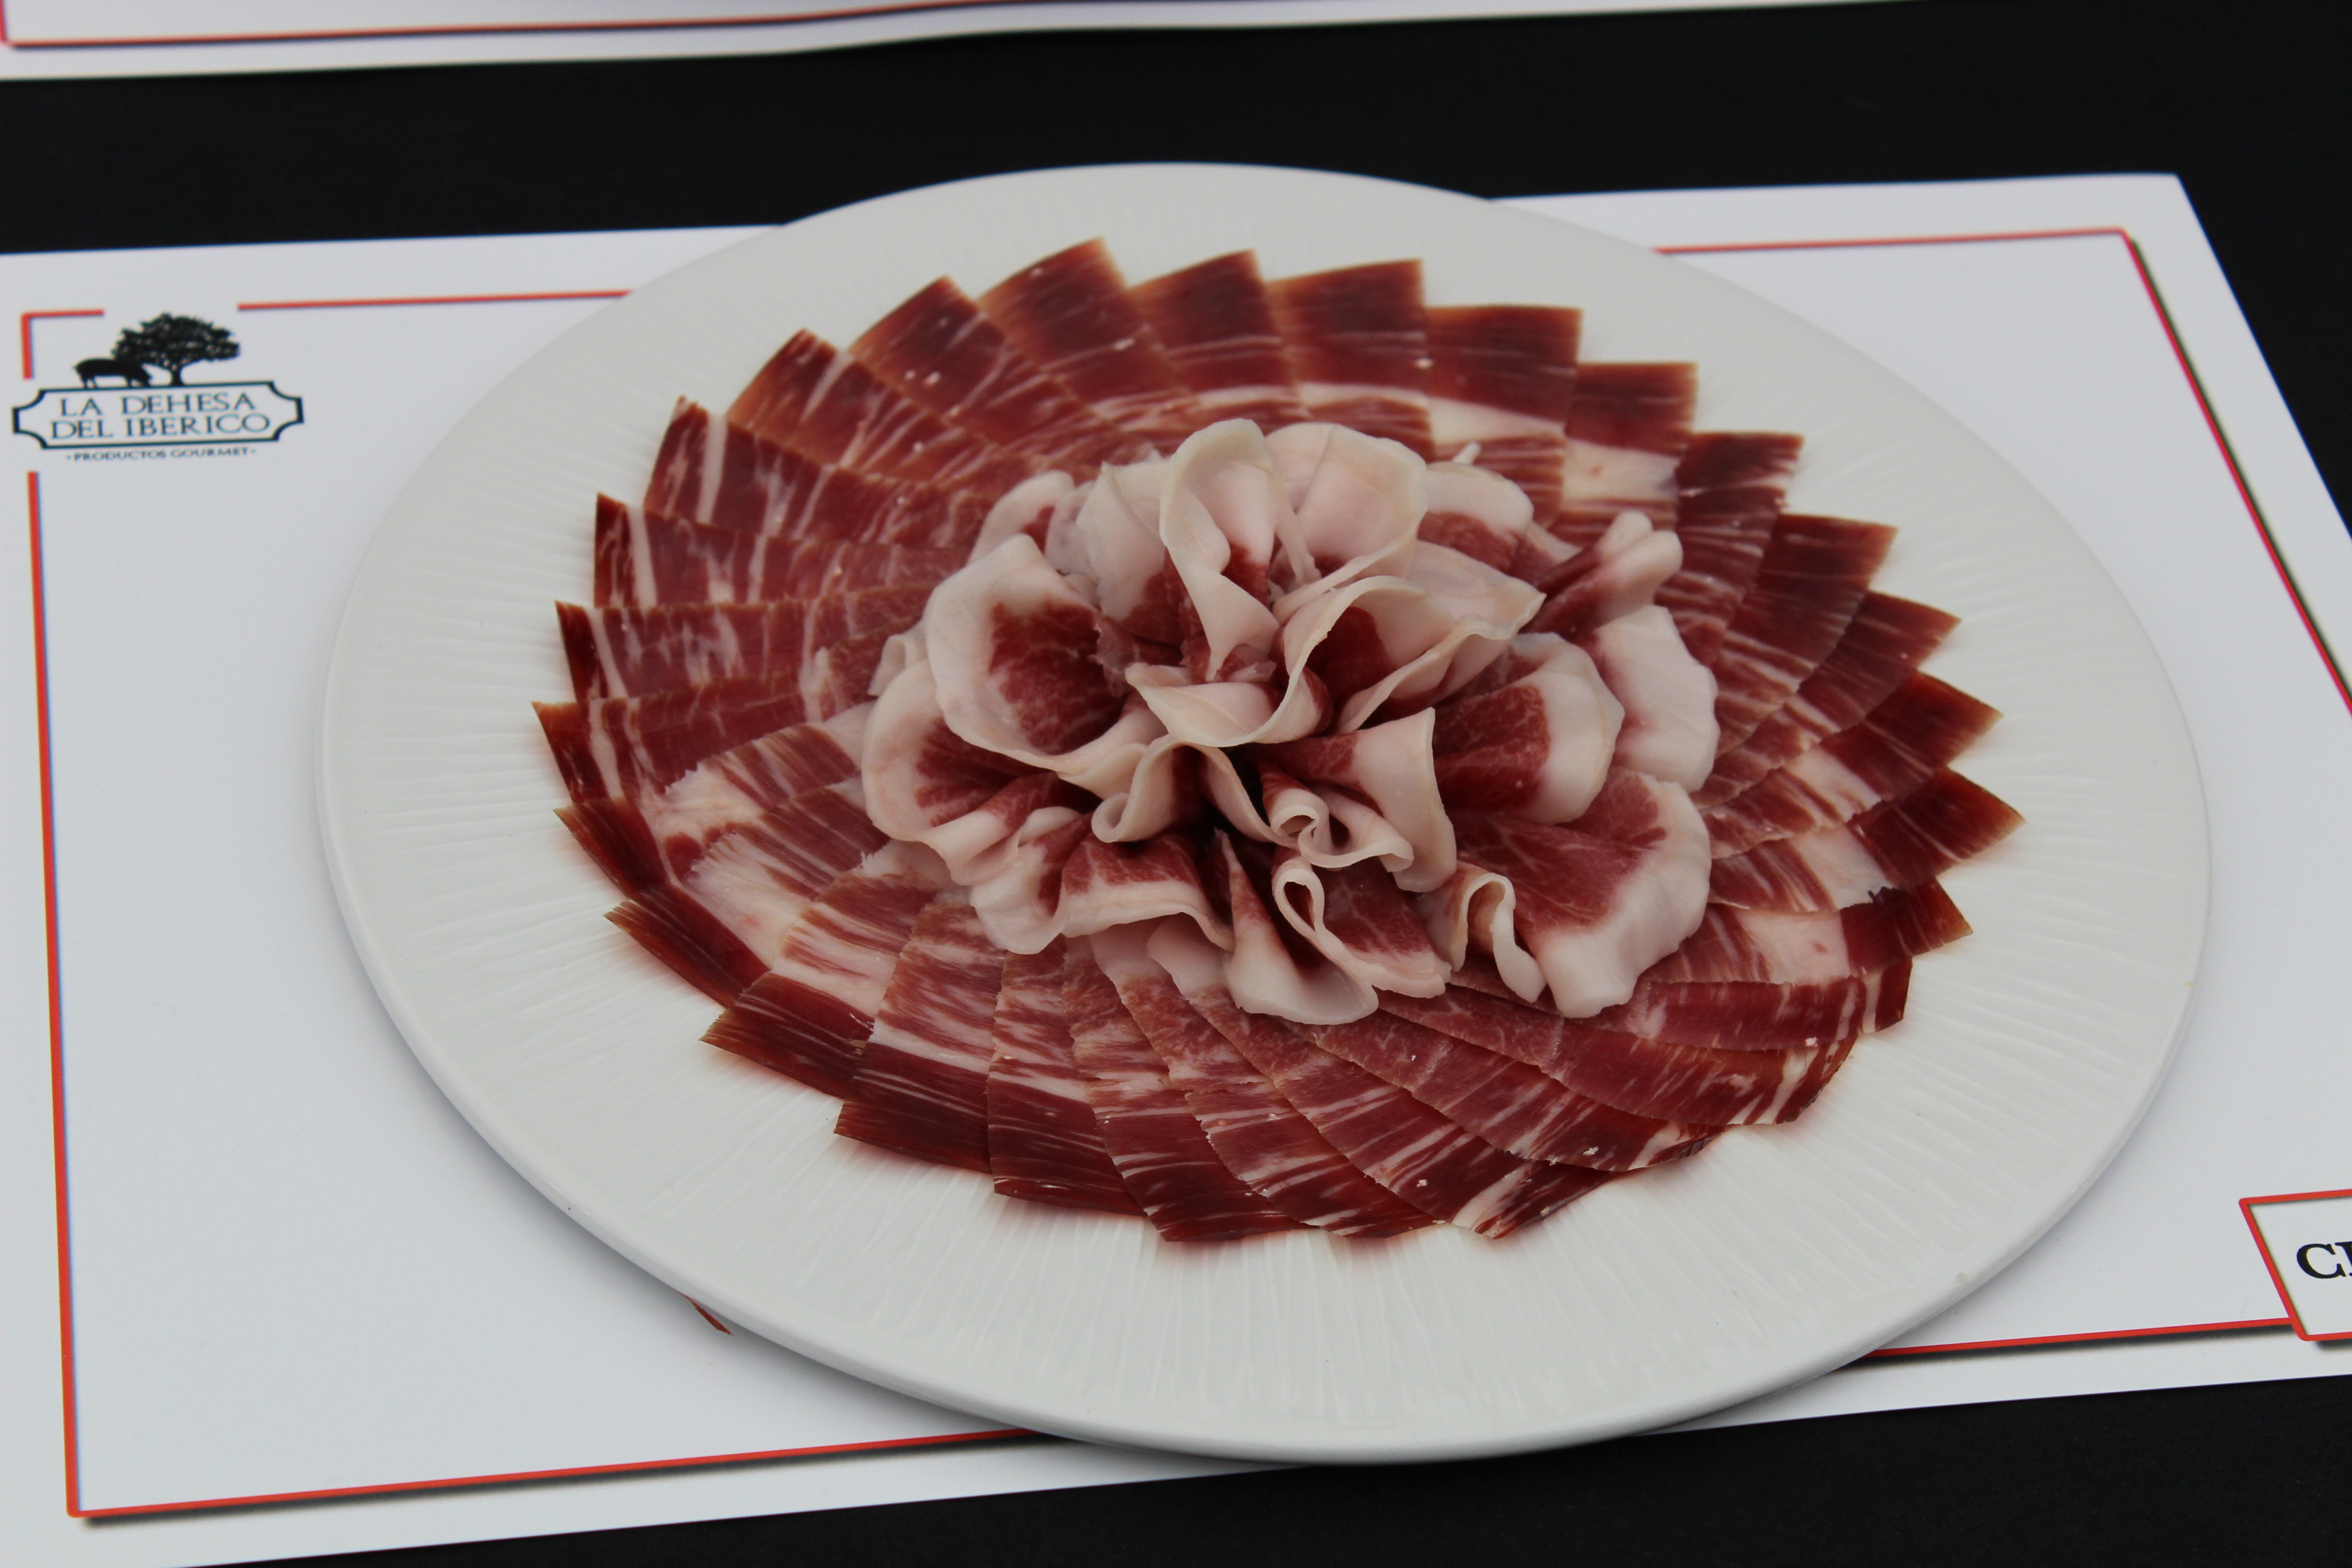 A plate of sliced Spanish ham